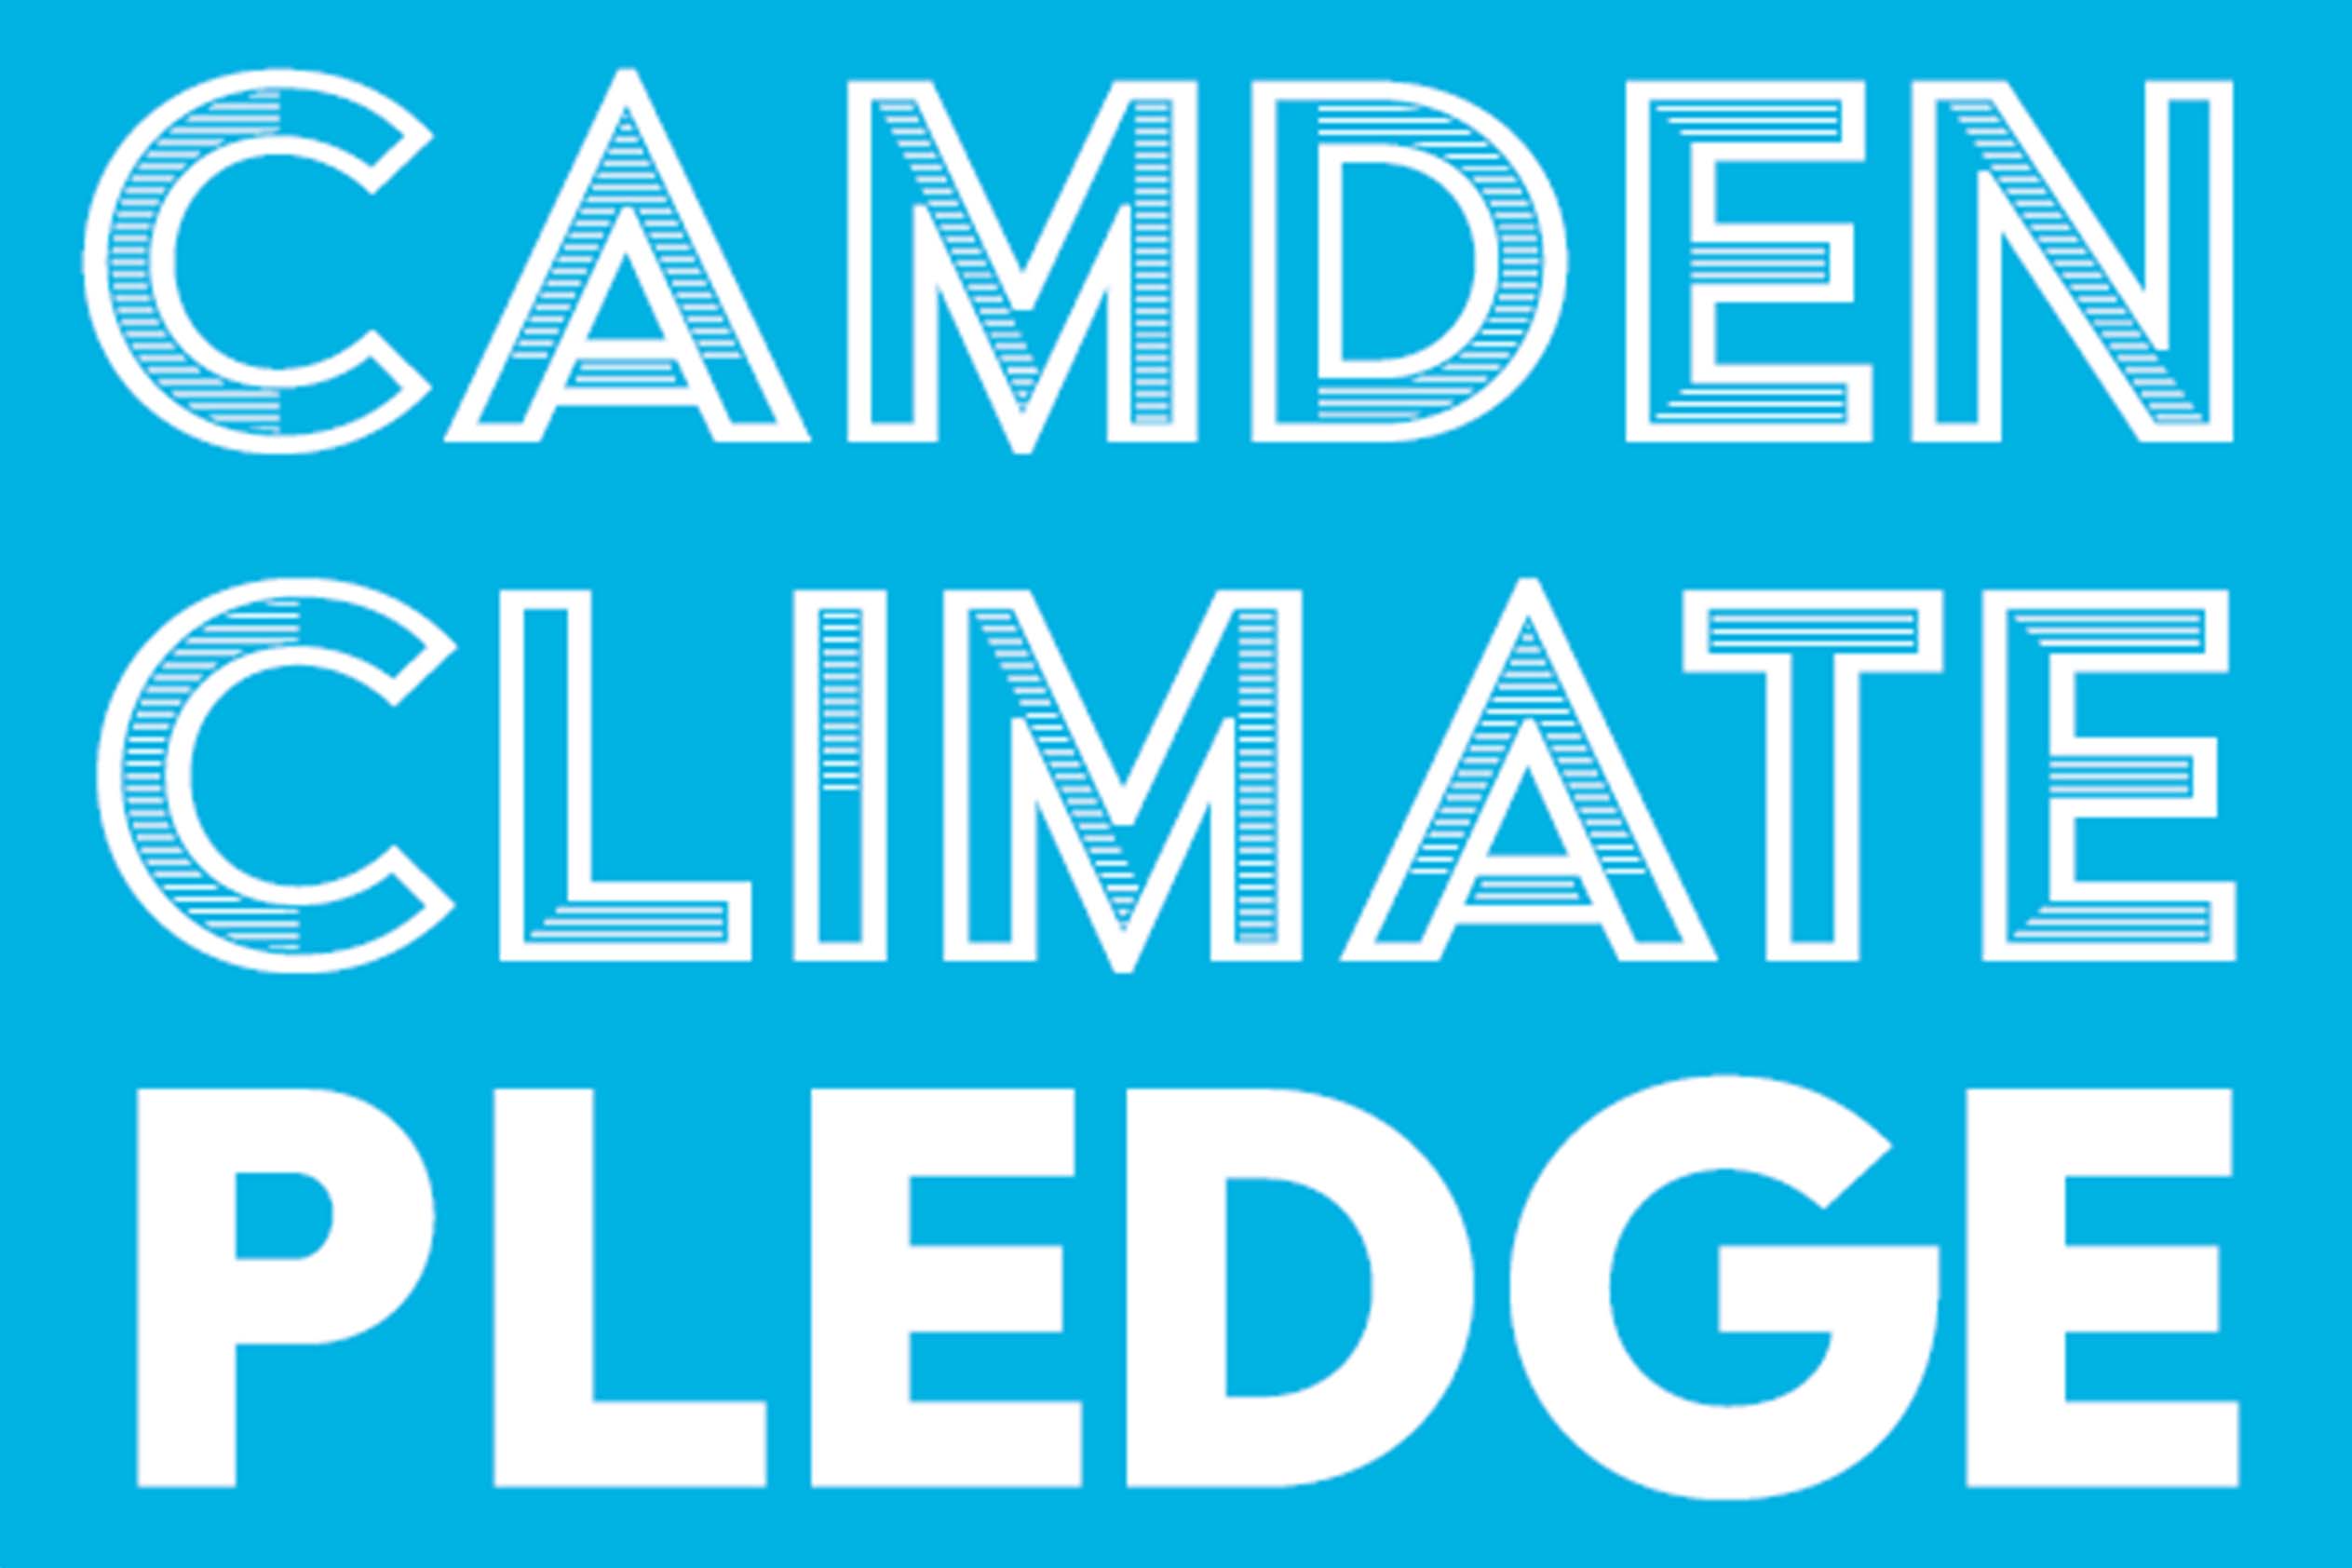 Camden Climate Pledge